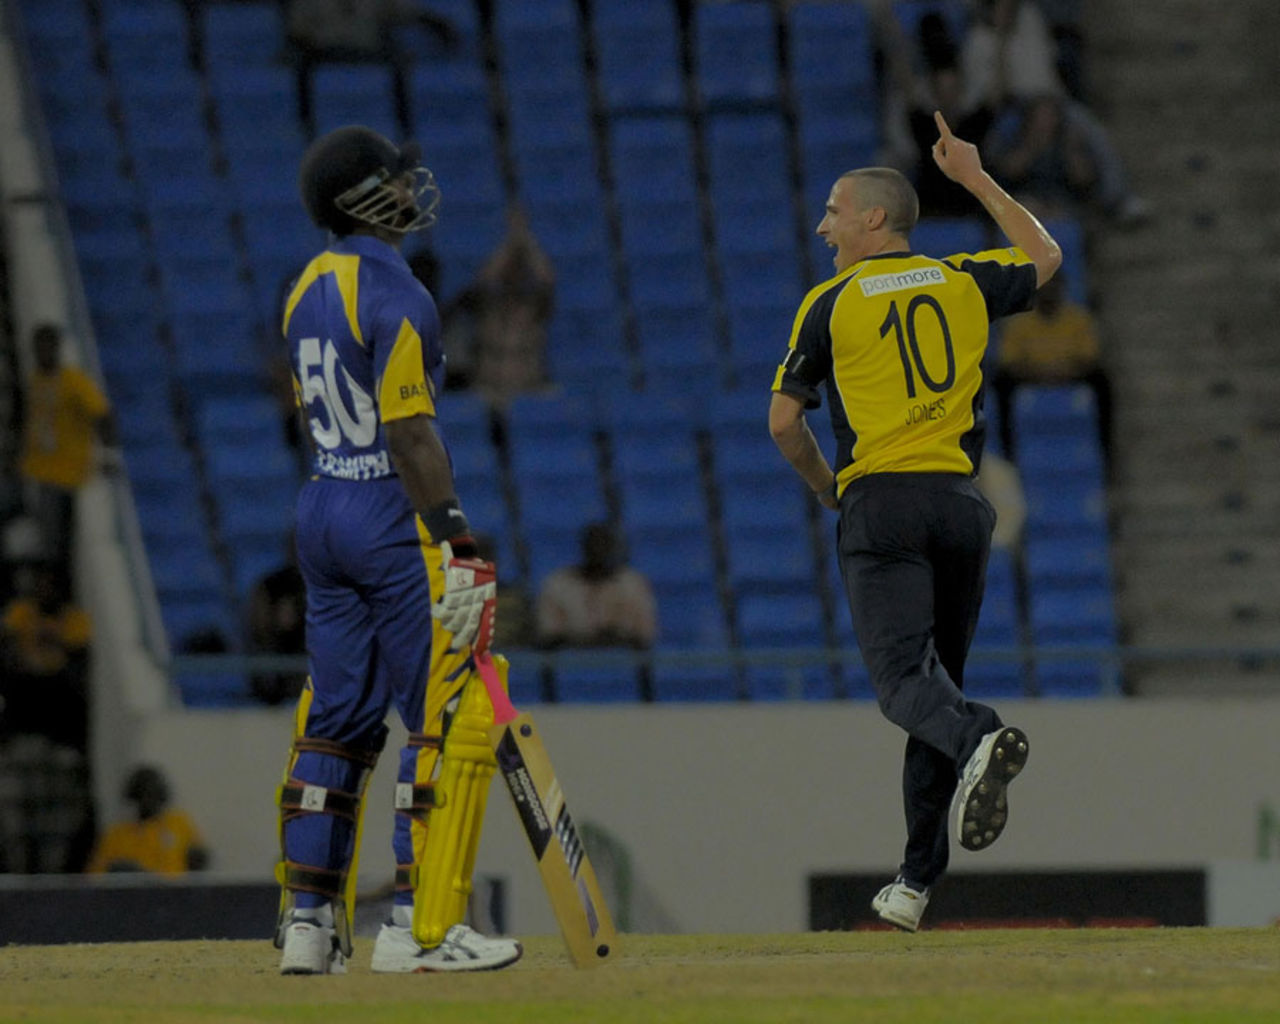 Simon Jones celebrates the wicket of Jonathan Carter, Barbados v Hampshire, Antigua, Caribbean T20, January 13, 2011 